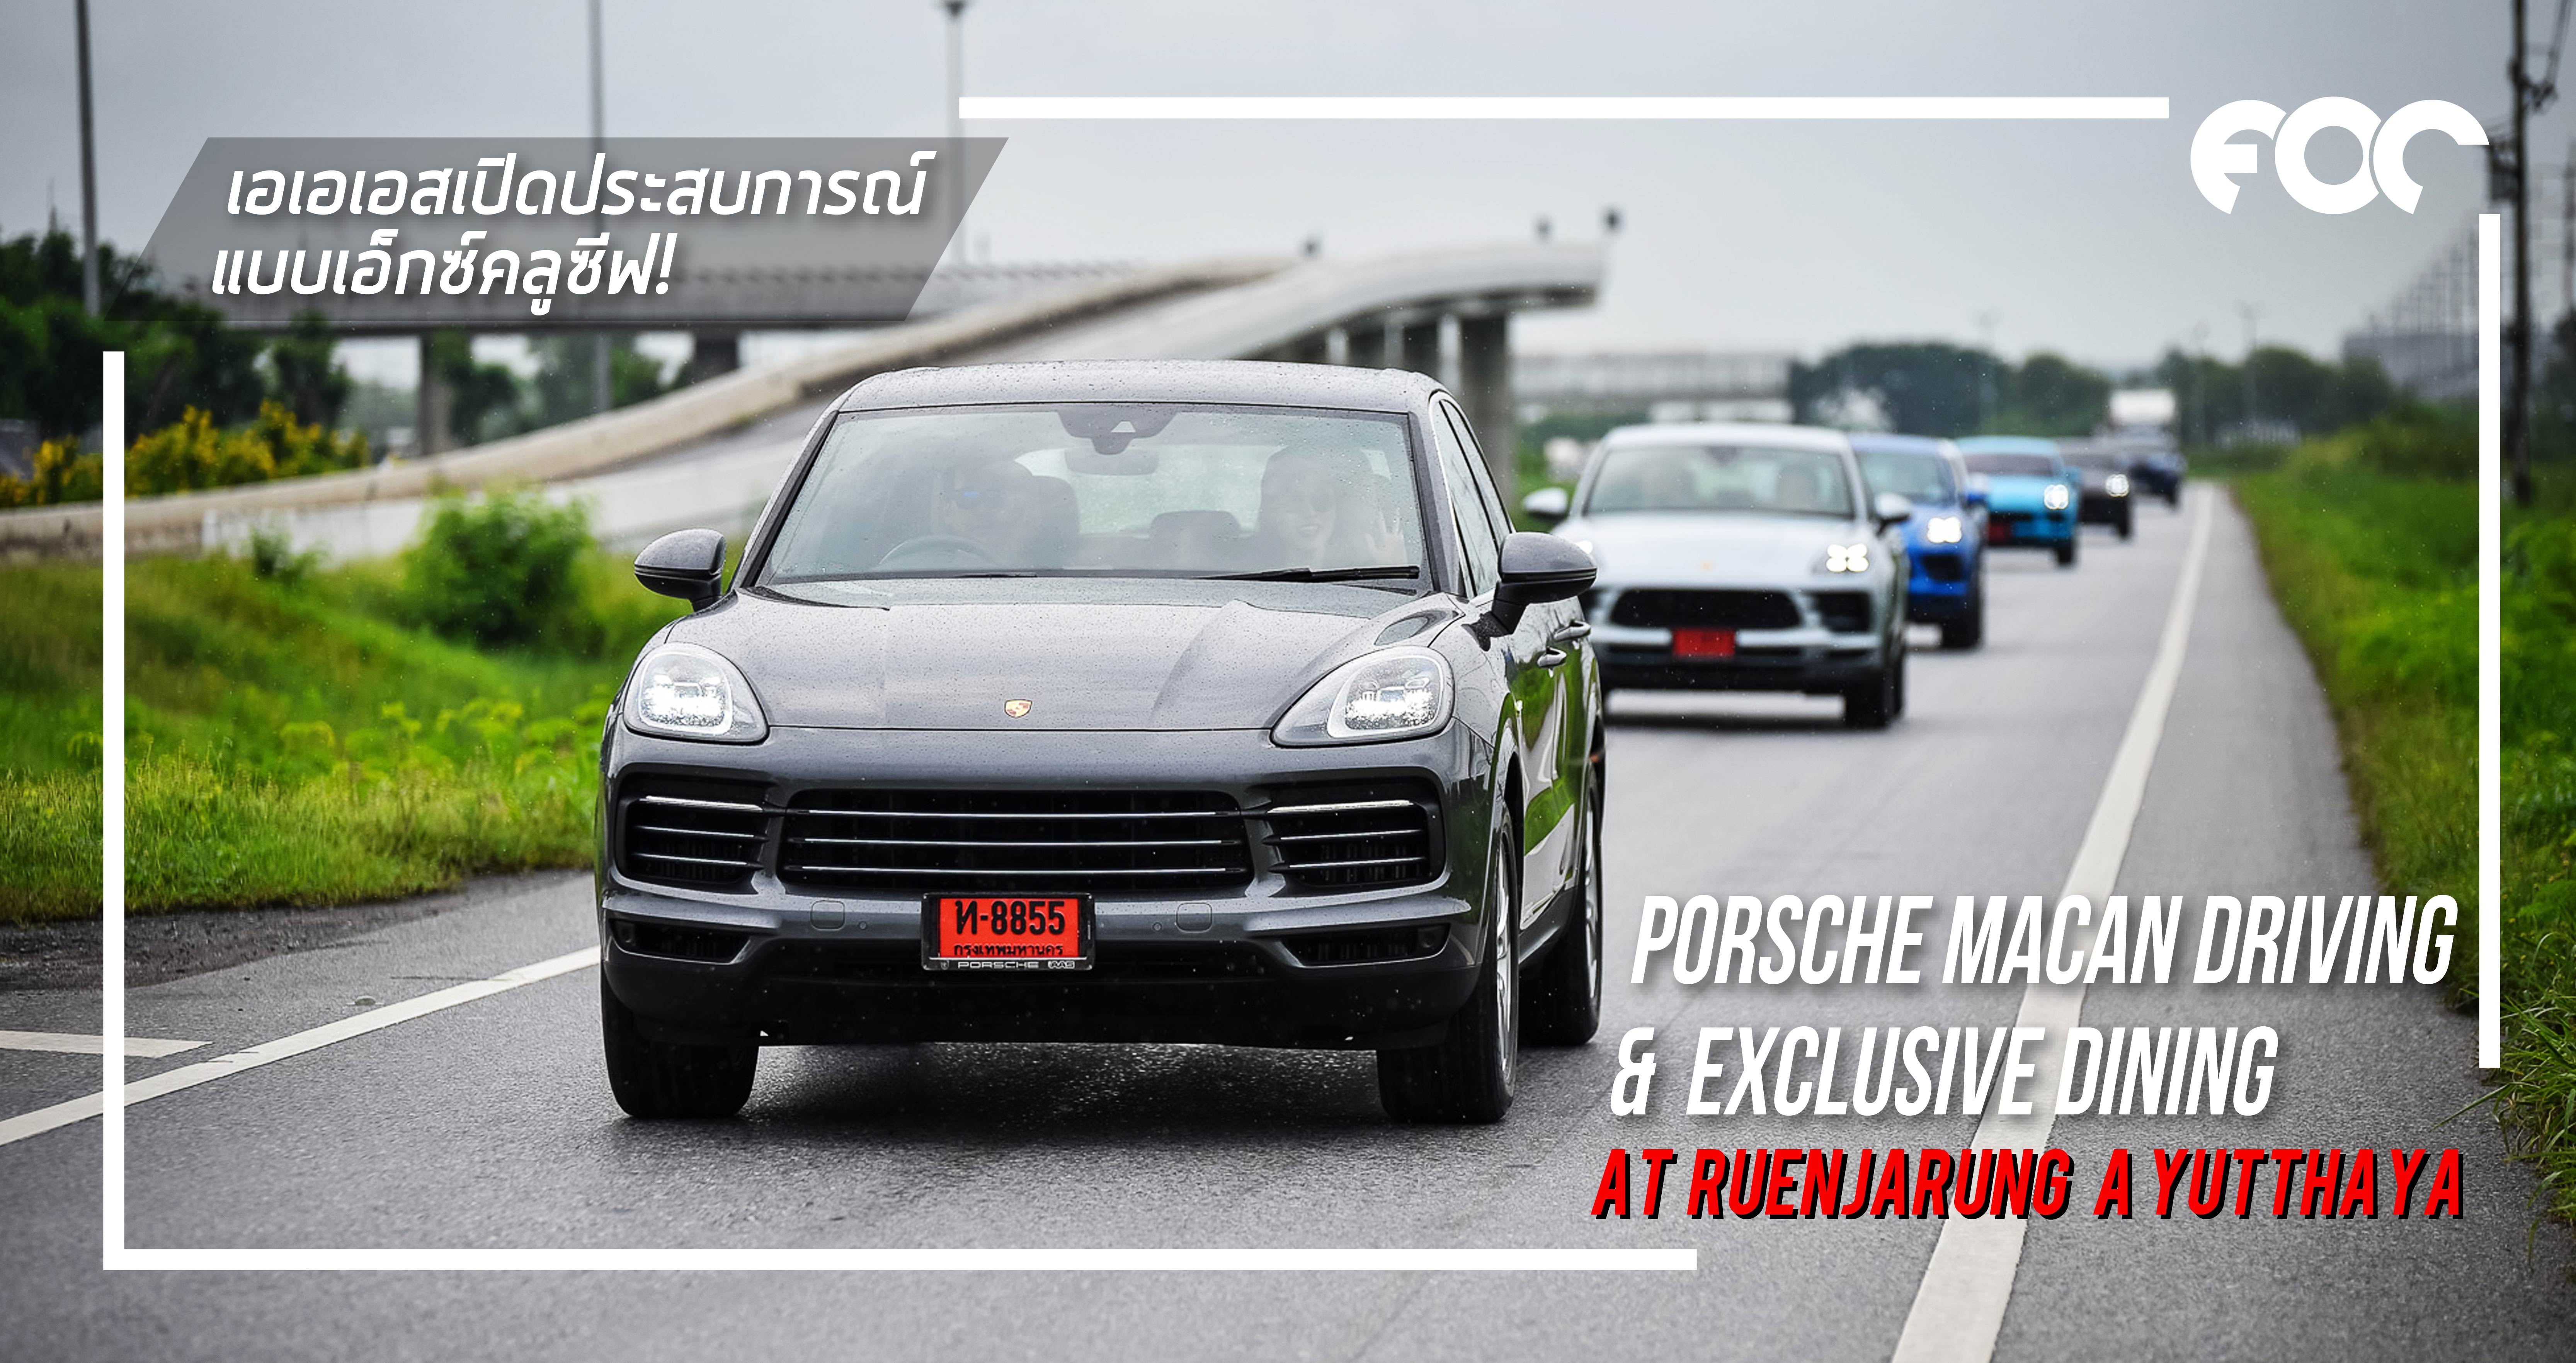 Porsche Macan Driving & Exclusive Dining at Ruenjarung Ayutthaya เปิดประสบการณ์ความอร่อยแบบเอ็กซ์คลูซีฟ